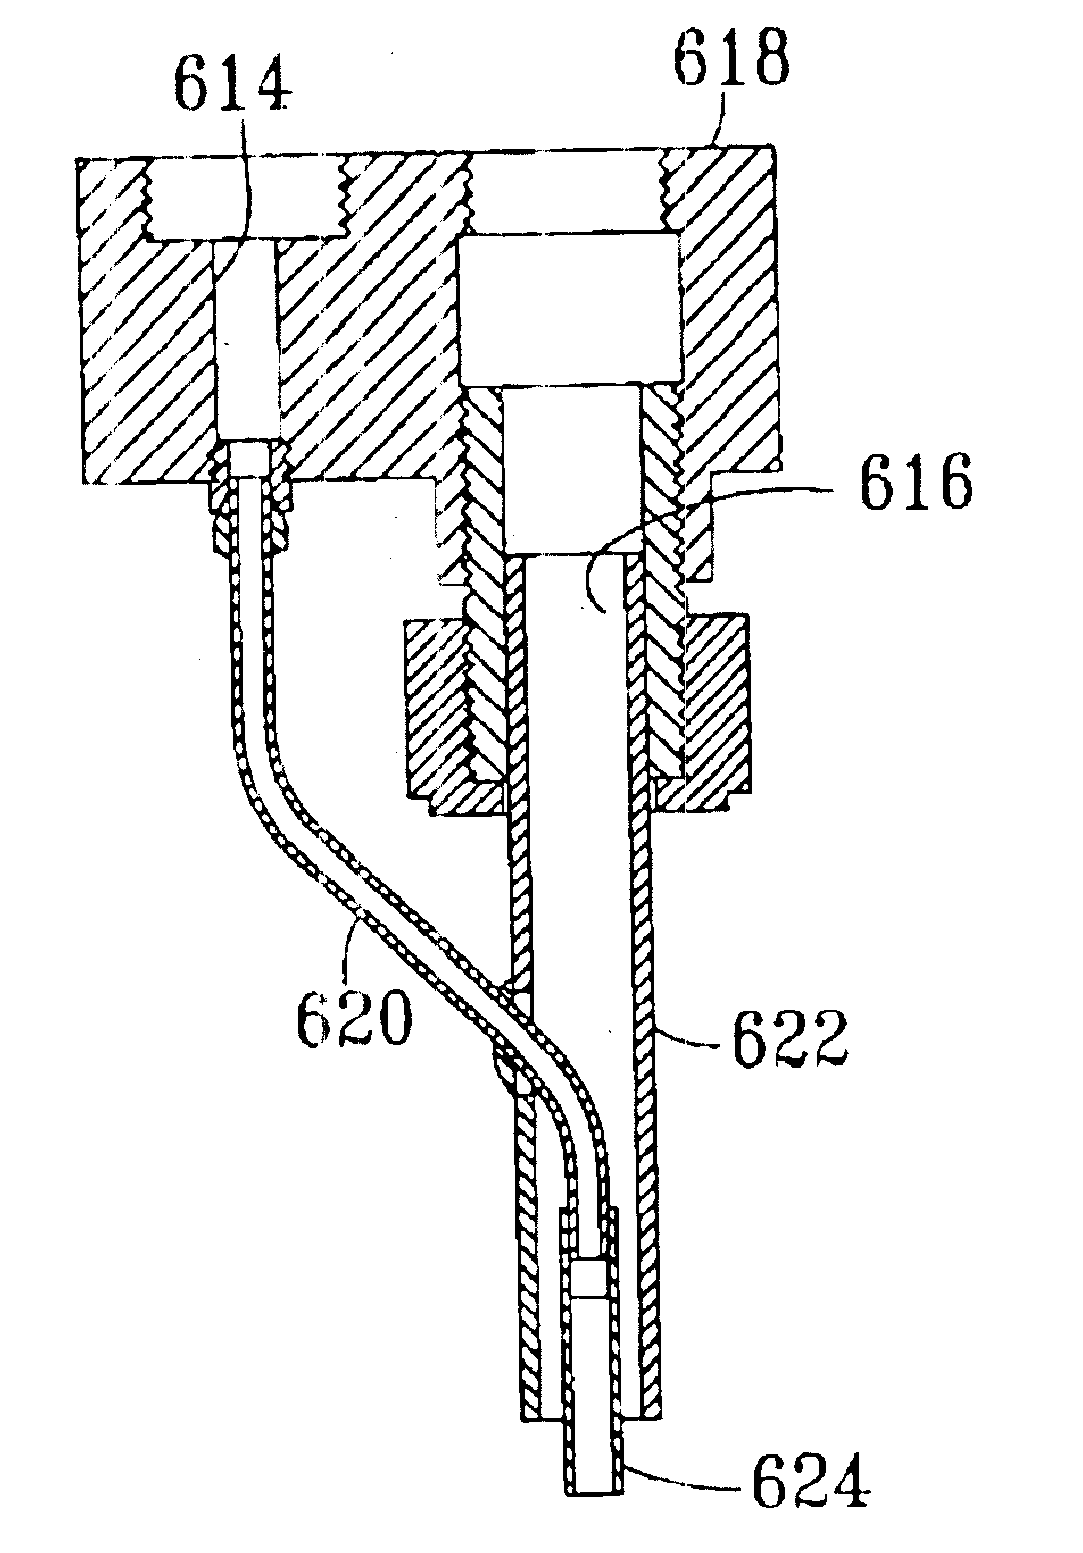 Apparatus for dispensing liquids and solids